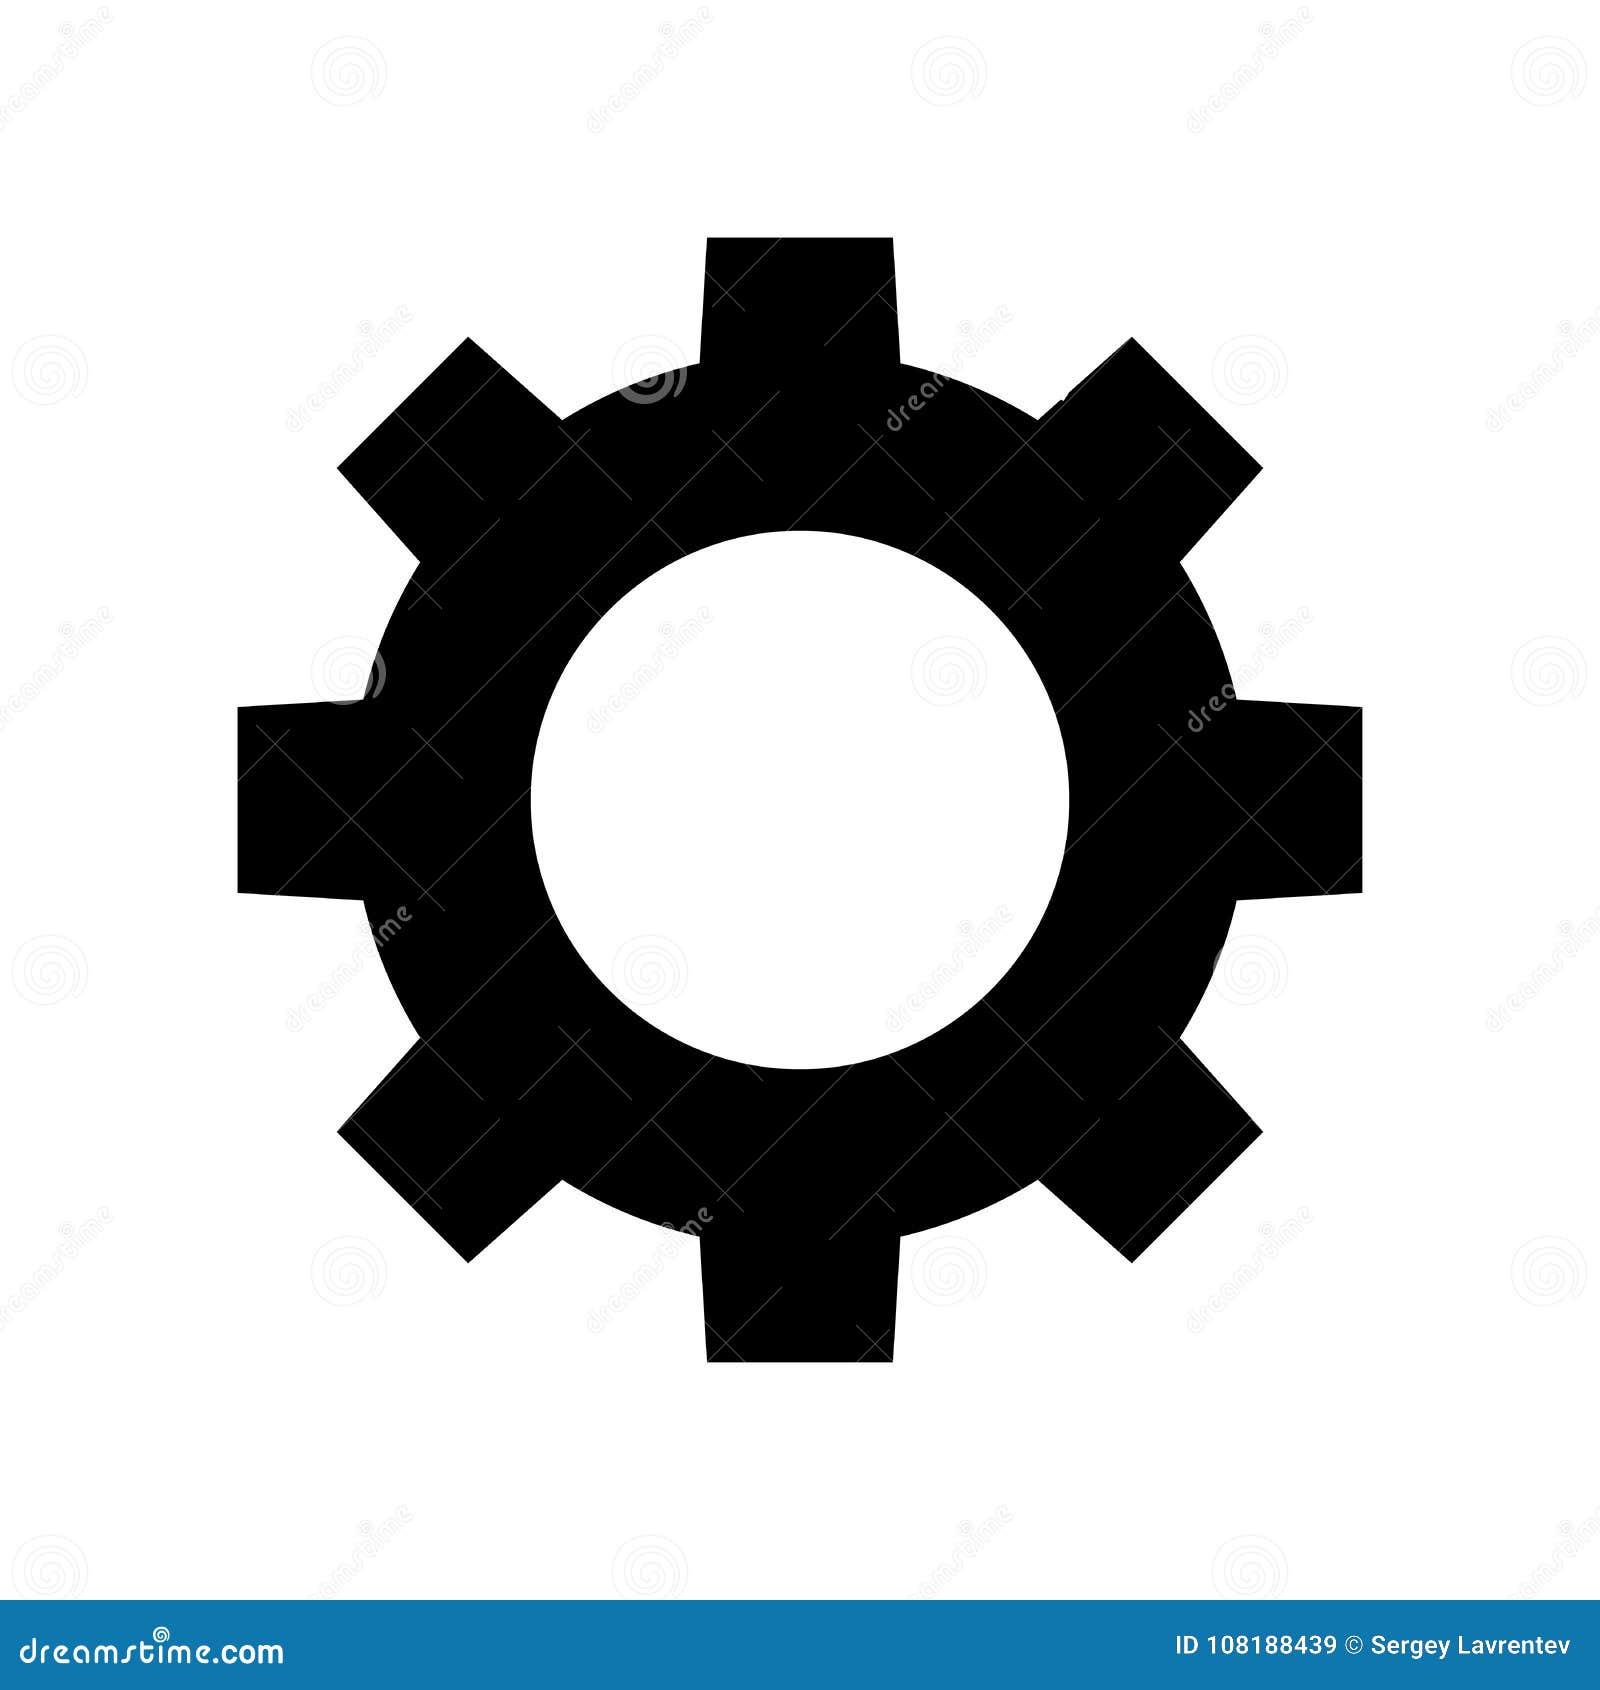 Gear vector icon stock vector. Illustration of circle - 108188439